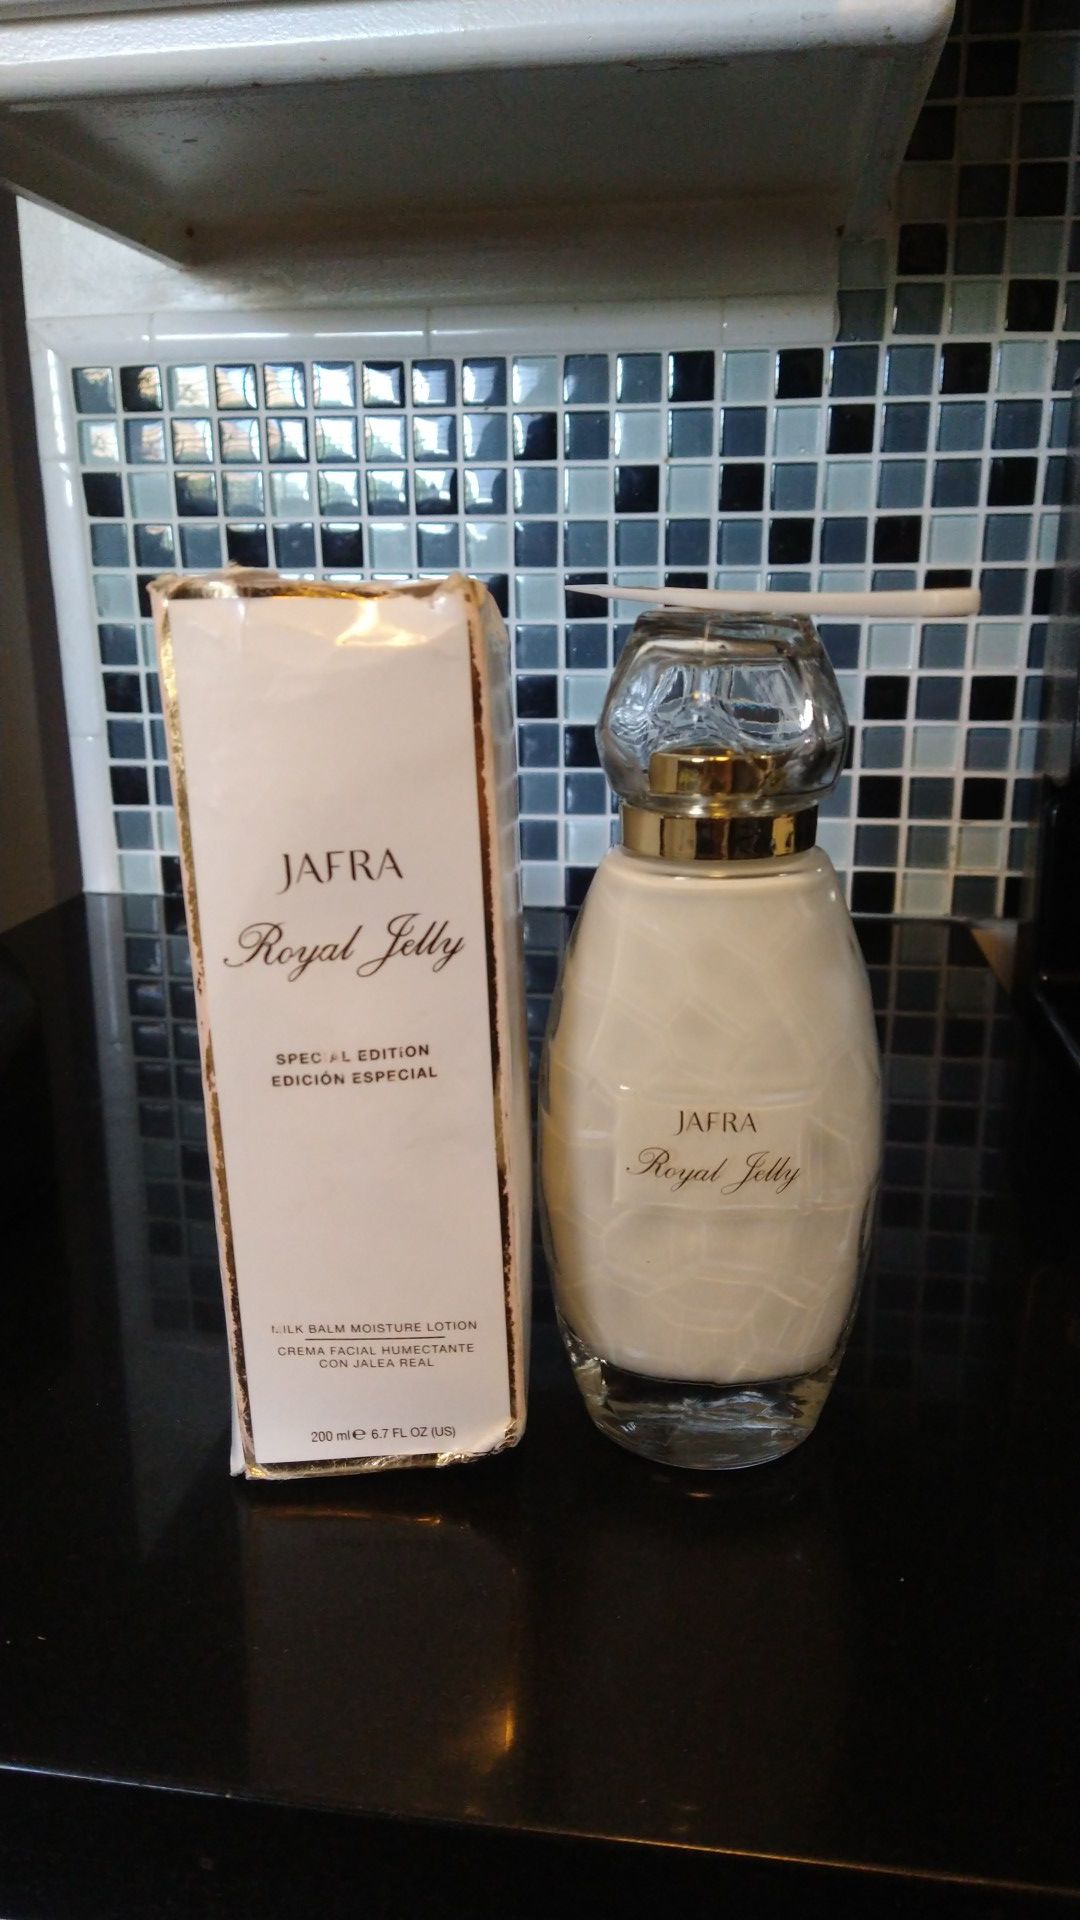 Jafra Royal jelly